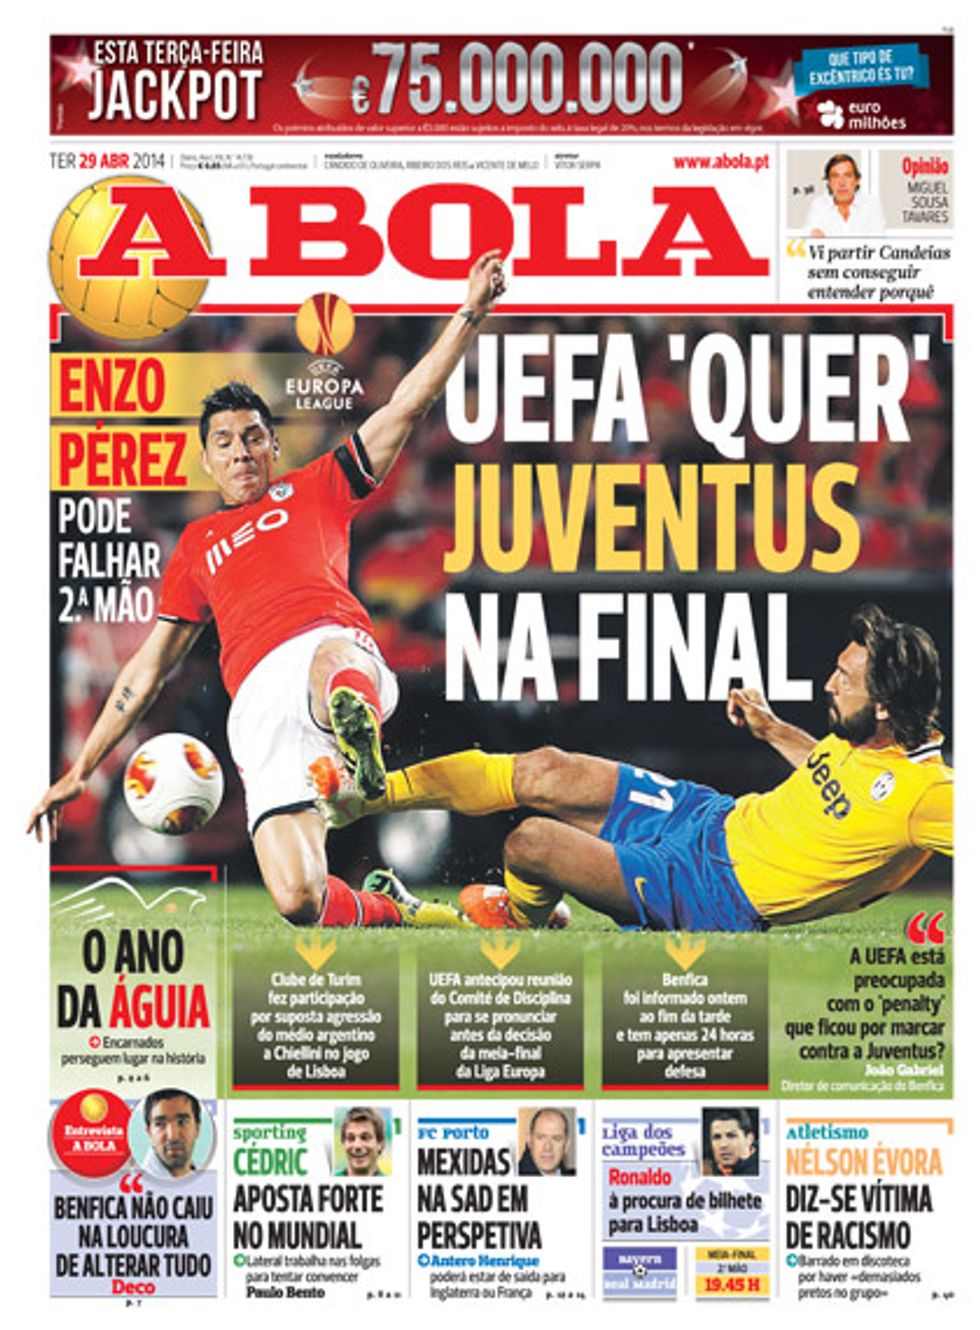 Veleno Benfica: "L'Uefa vuole la Juve in finale"